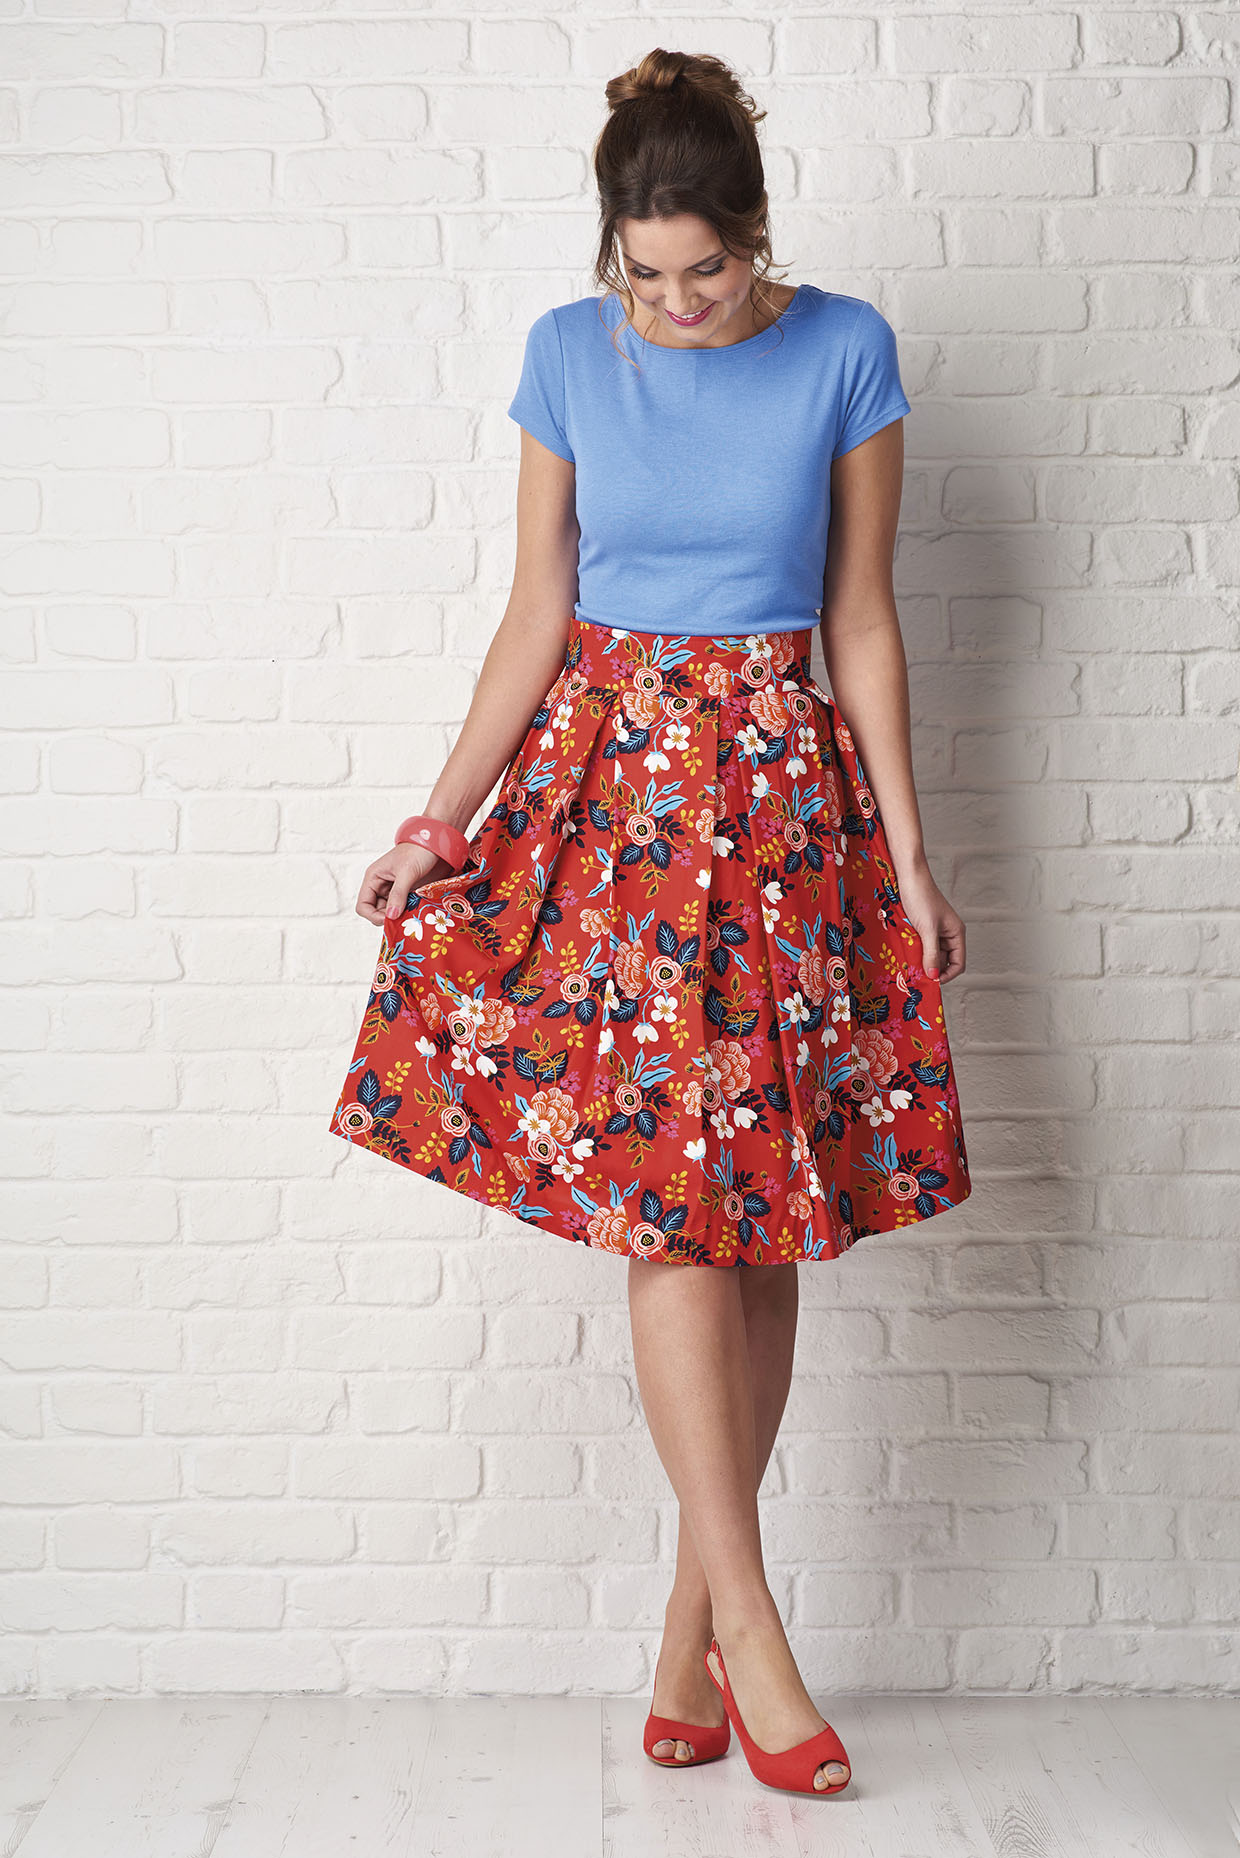 Pleated skirt pattern